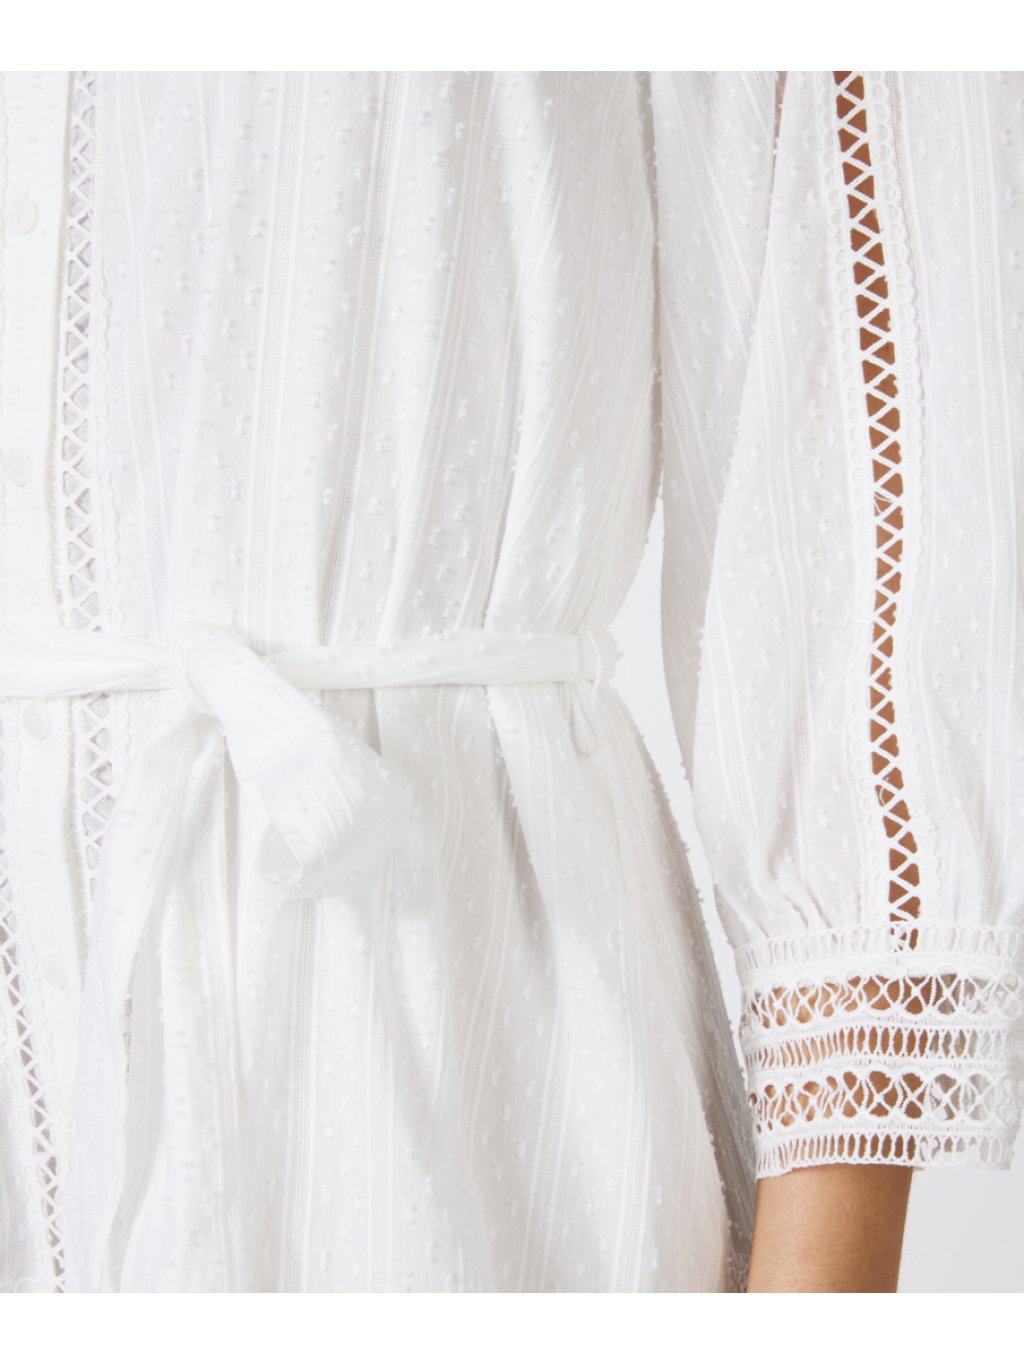 Šaty Esqualo 14222 bílé s krajkou